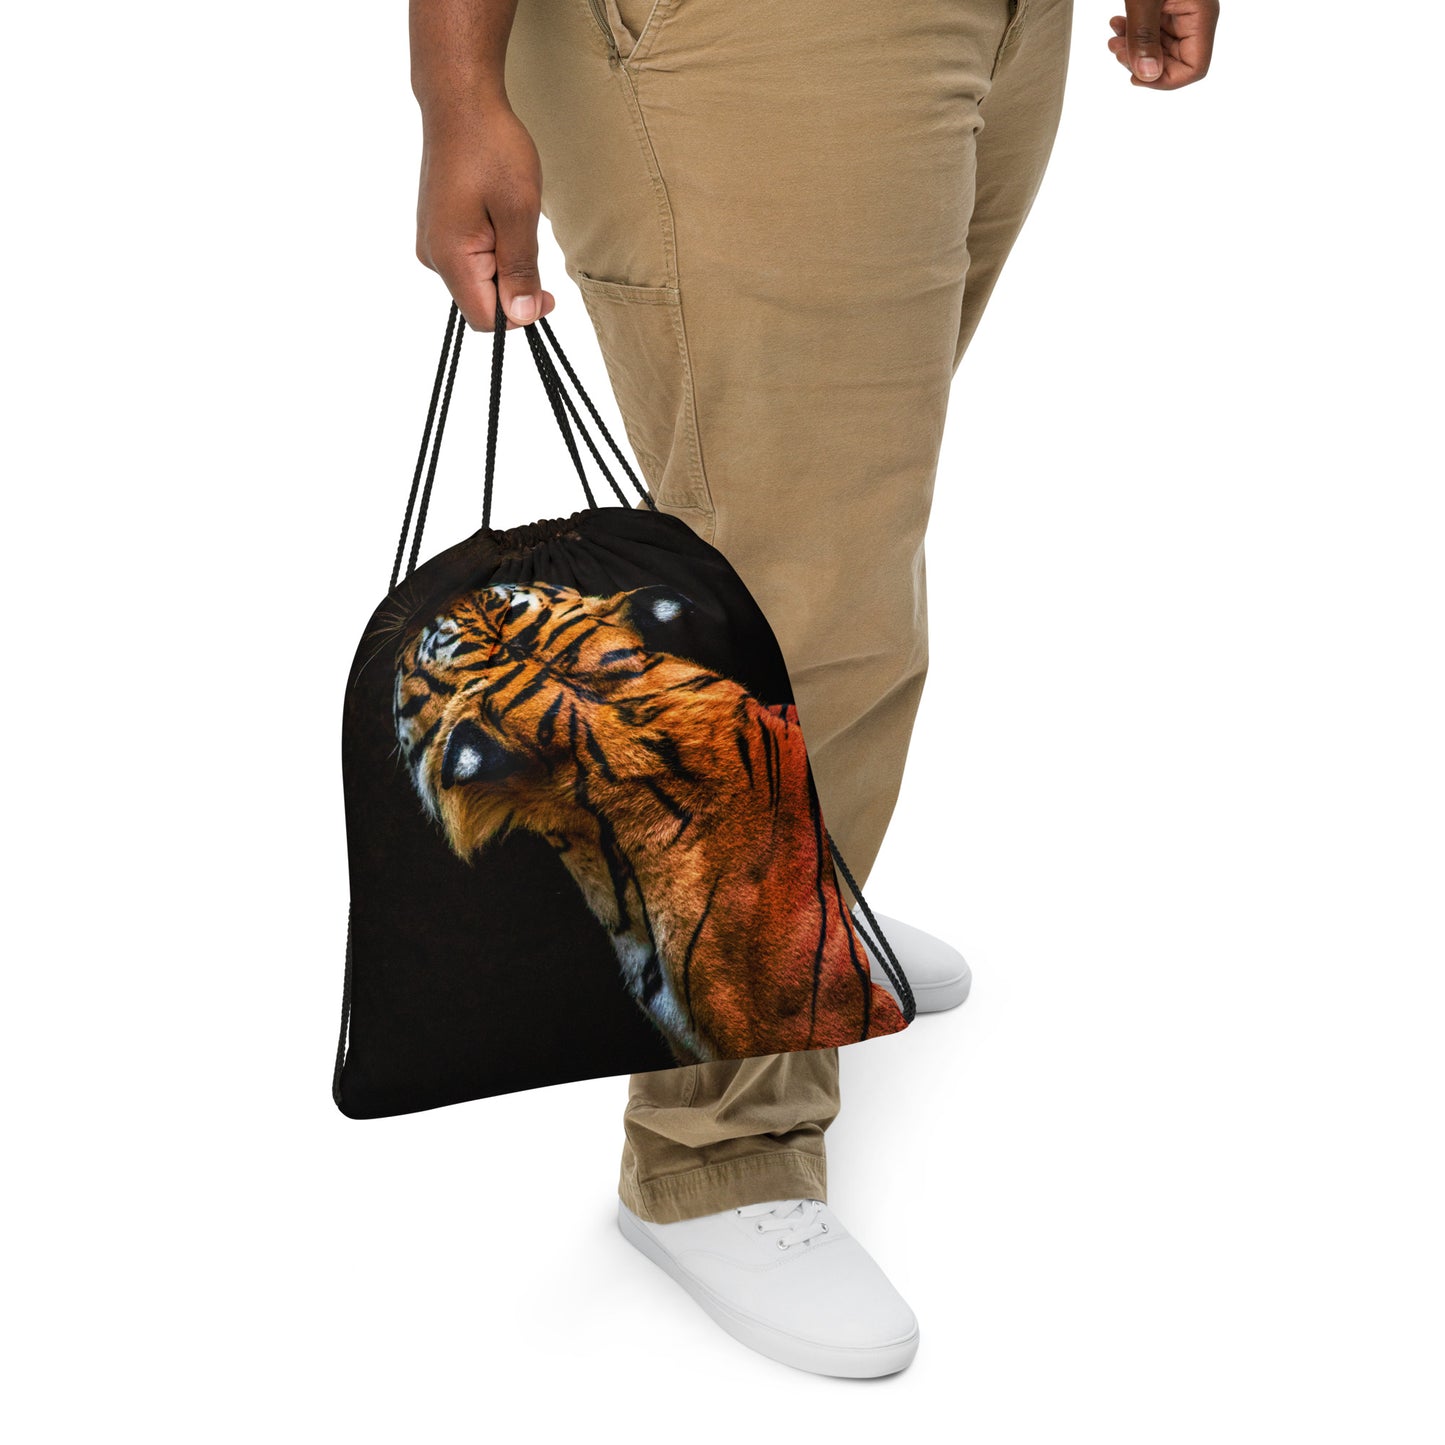 TigerHead Drawstring Bag